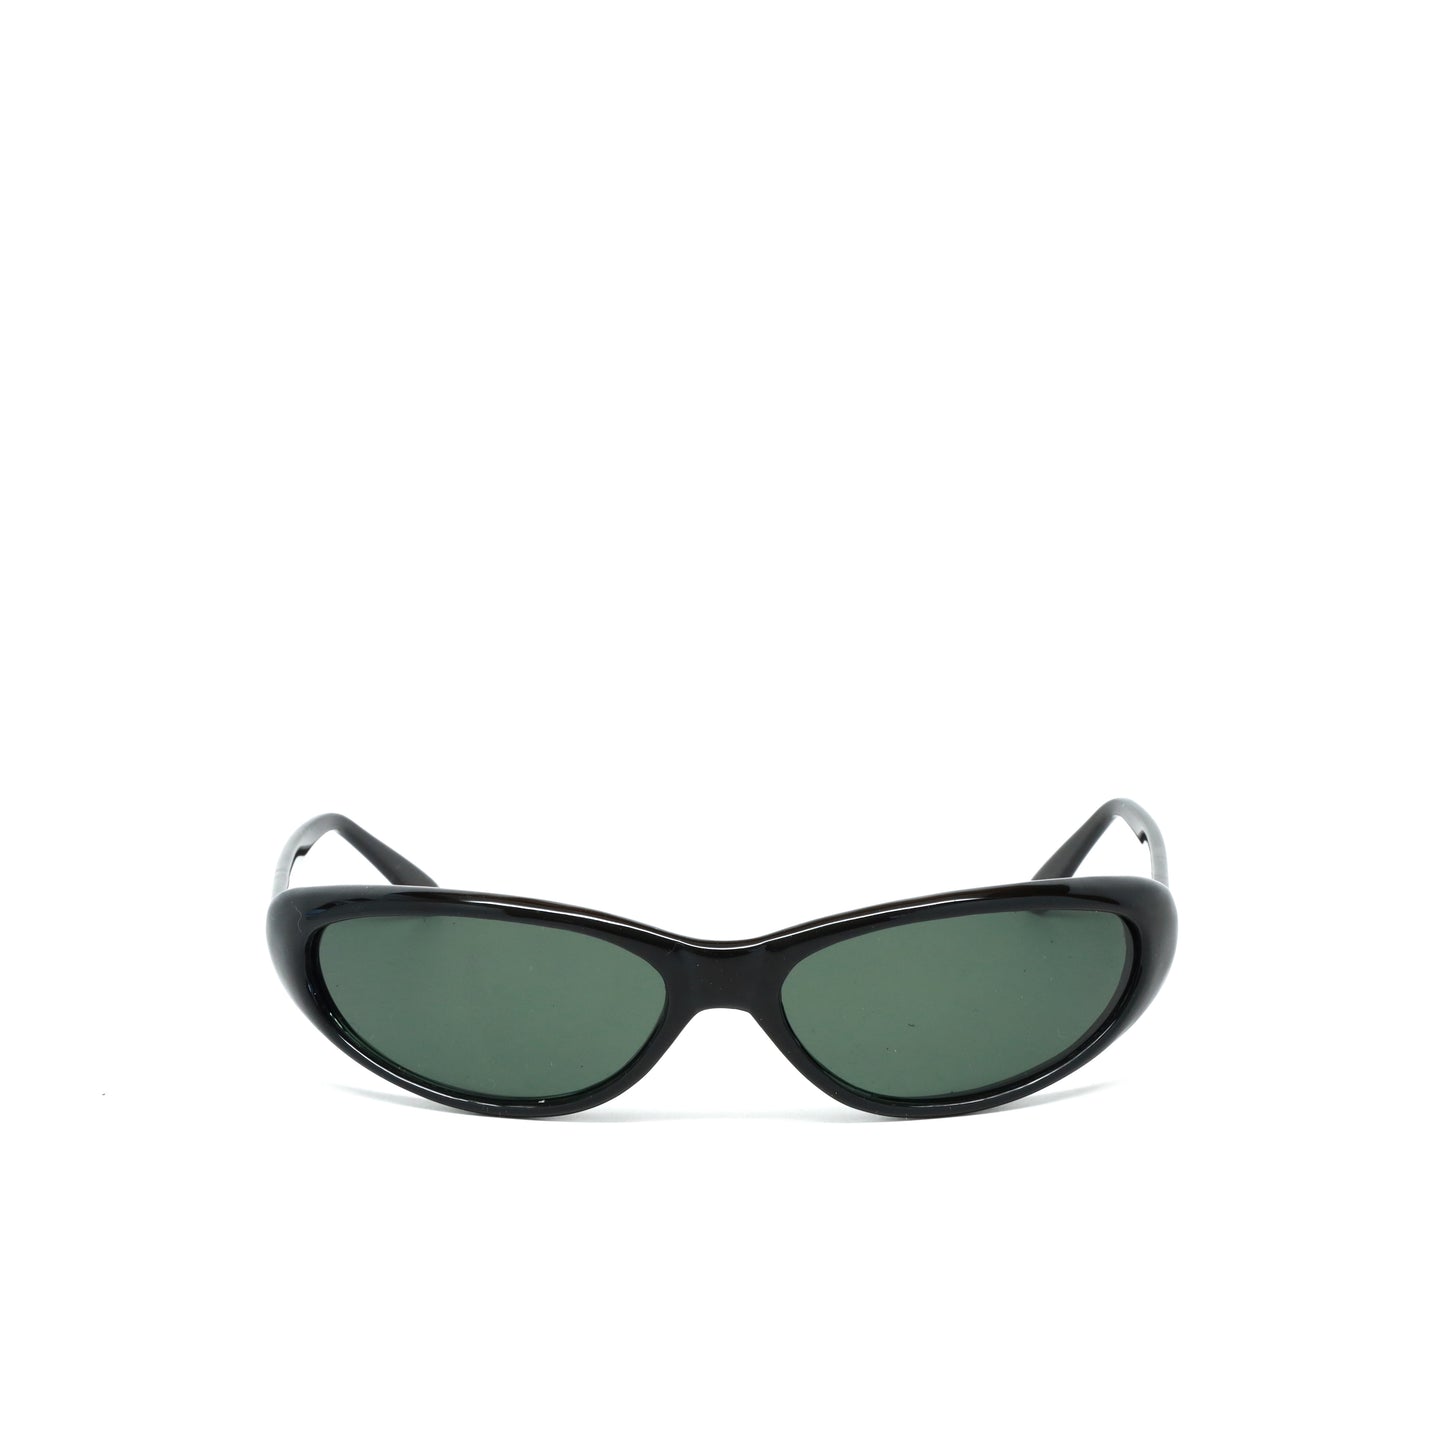 Vintage Standard Size Slim Narrow Oval Frame Sunglasses - Black